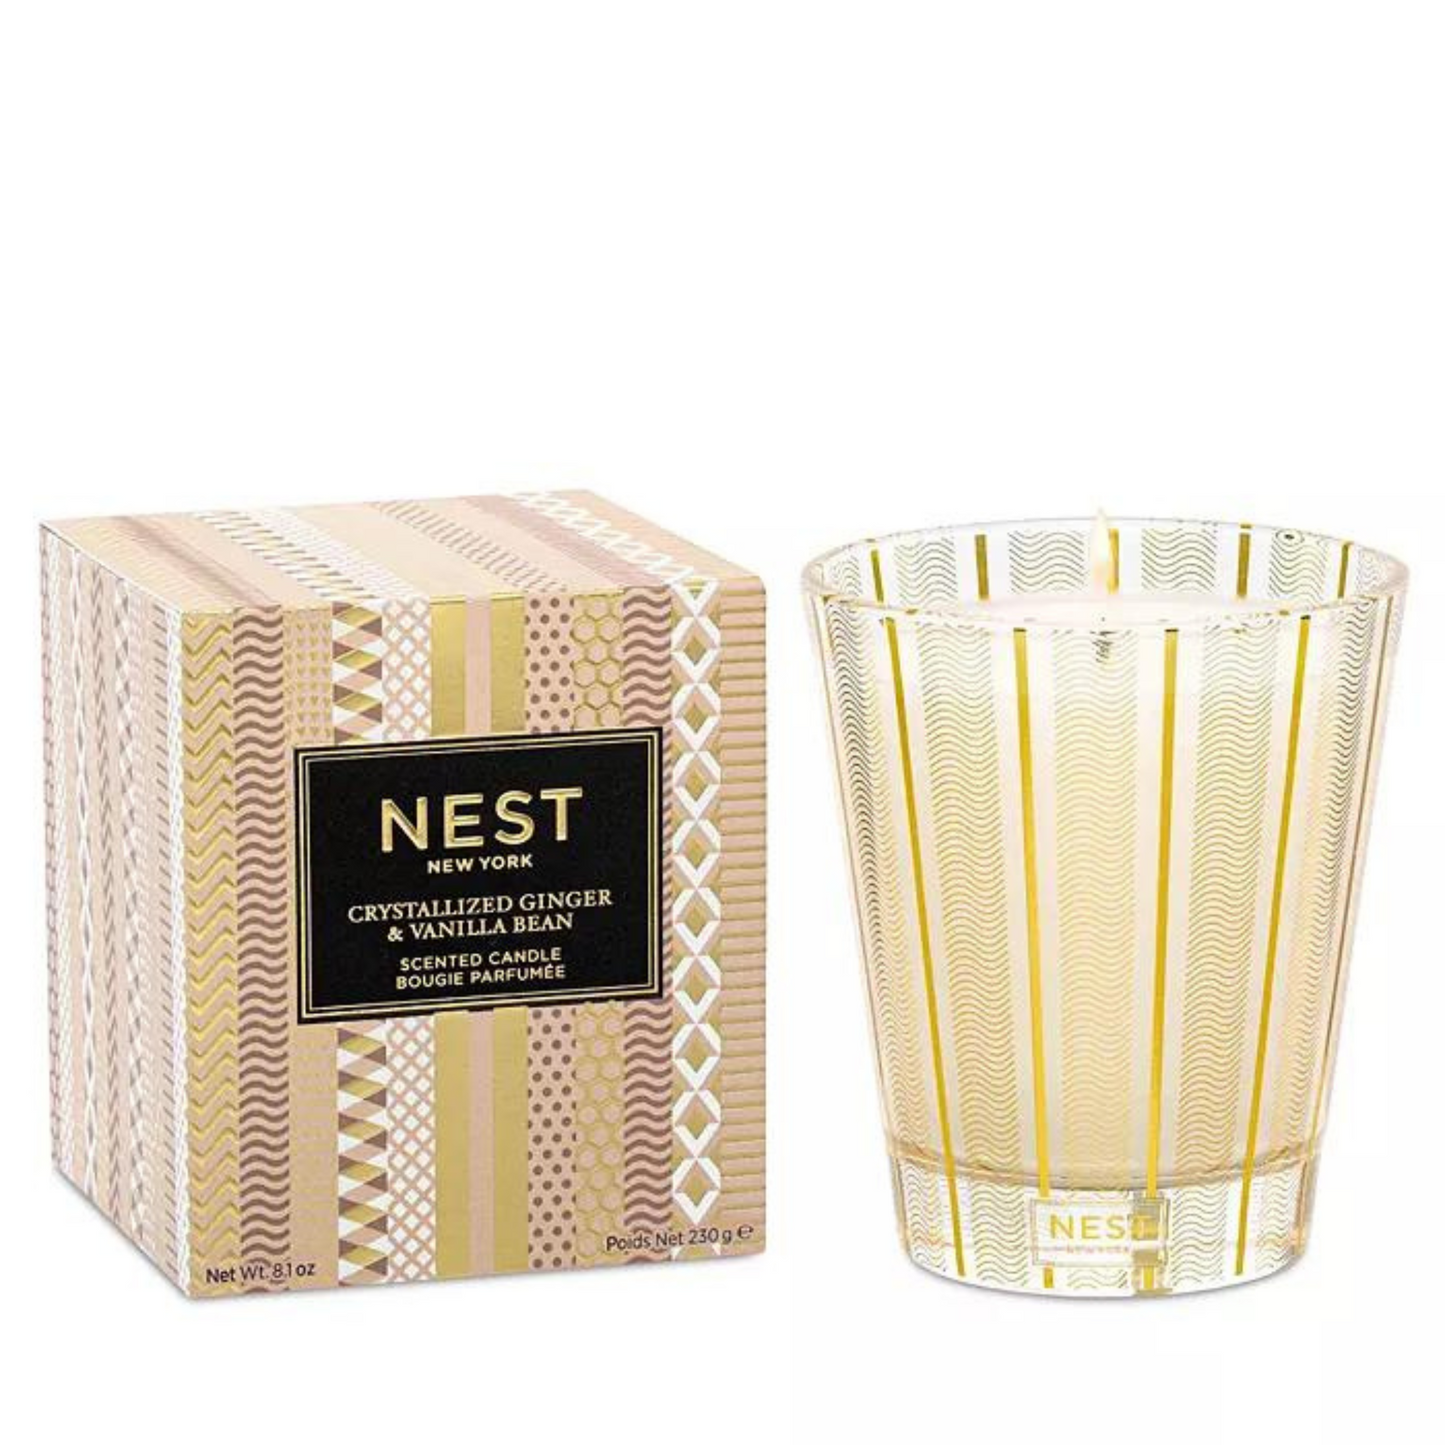 Primary Image of Nest Fragrances Crystallized Ginger & Vanilla Bean Classic Candle (8.1 oz) 